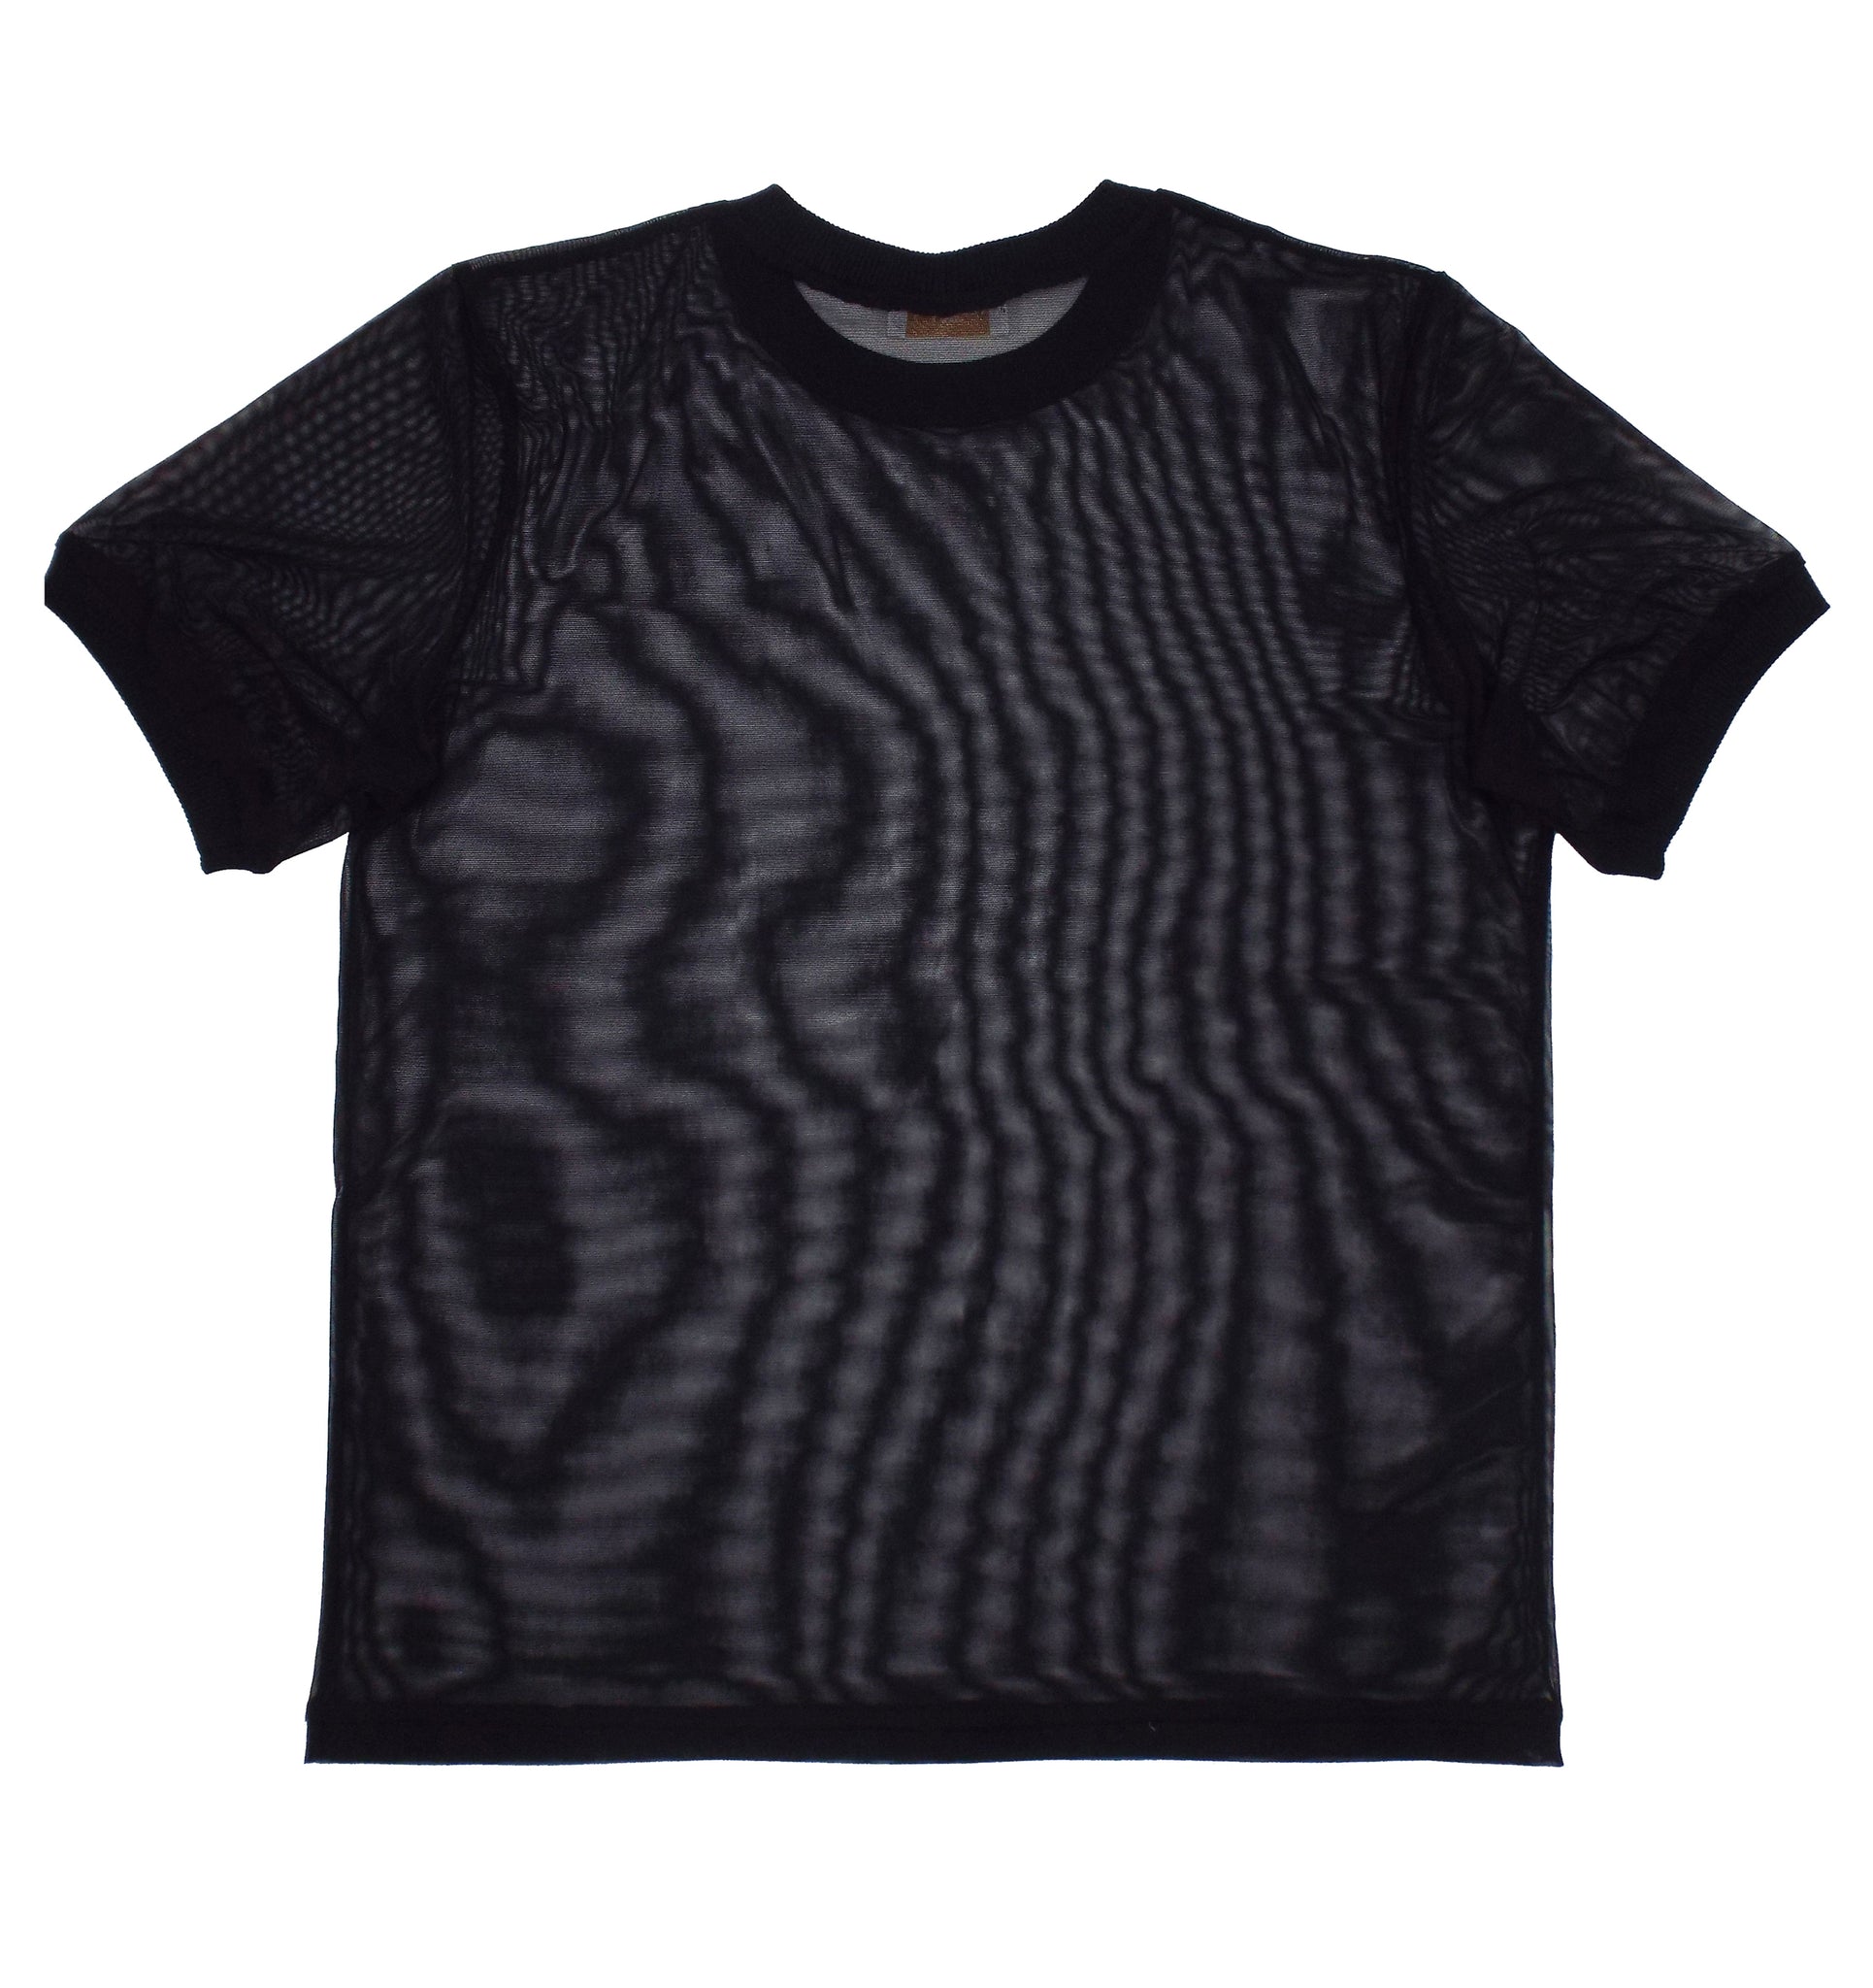 ‘SEX KULT’ T-Shirt Black